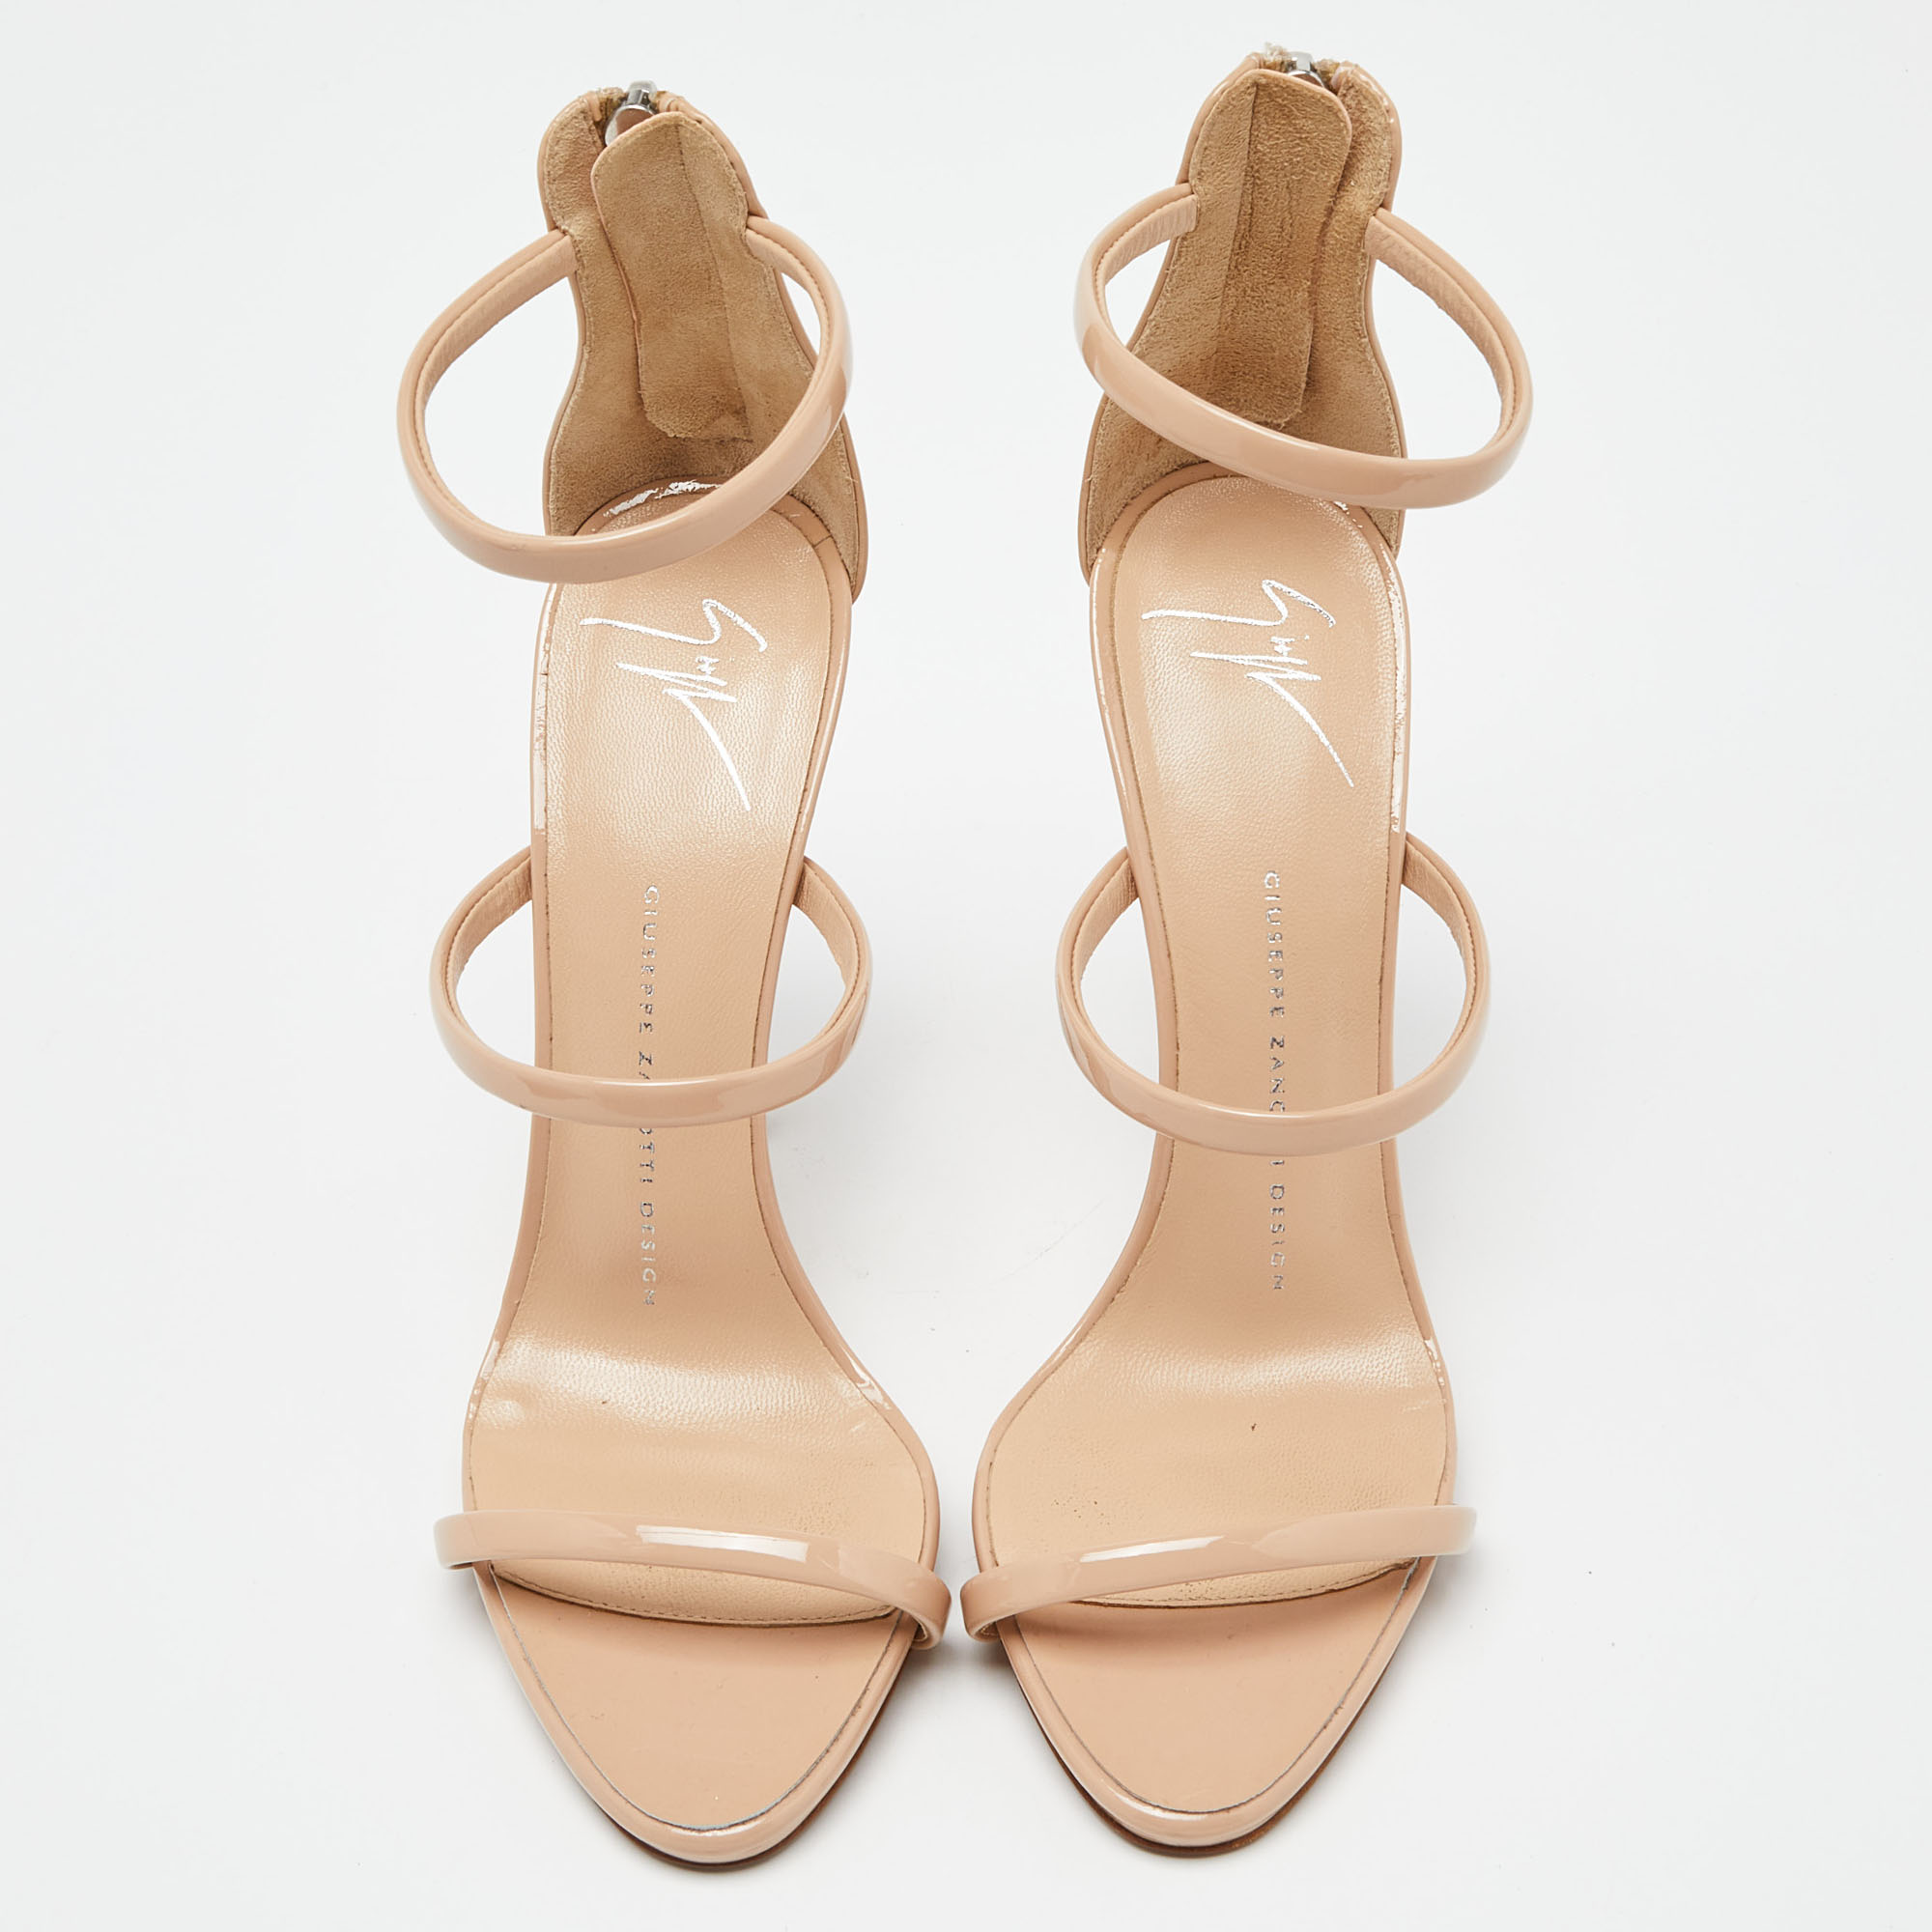 Giuseppe Zanotti Beige Patent Leather Harmony Sandals Size 38